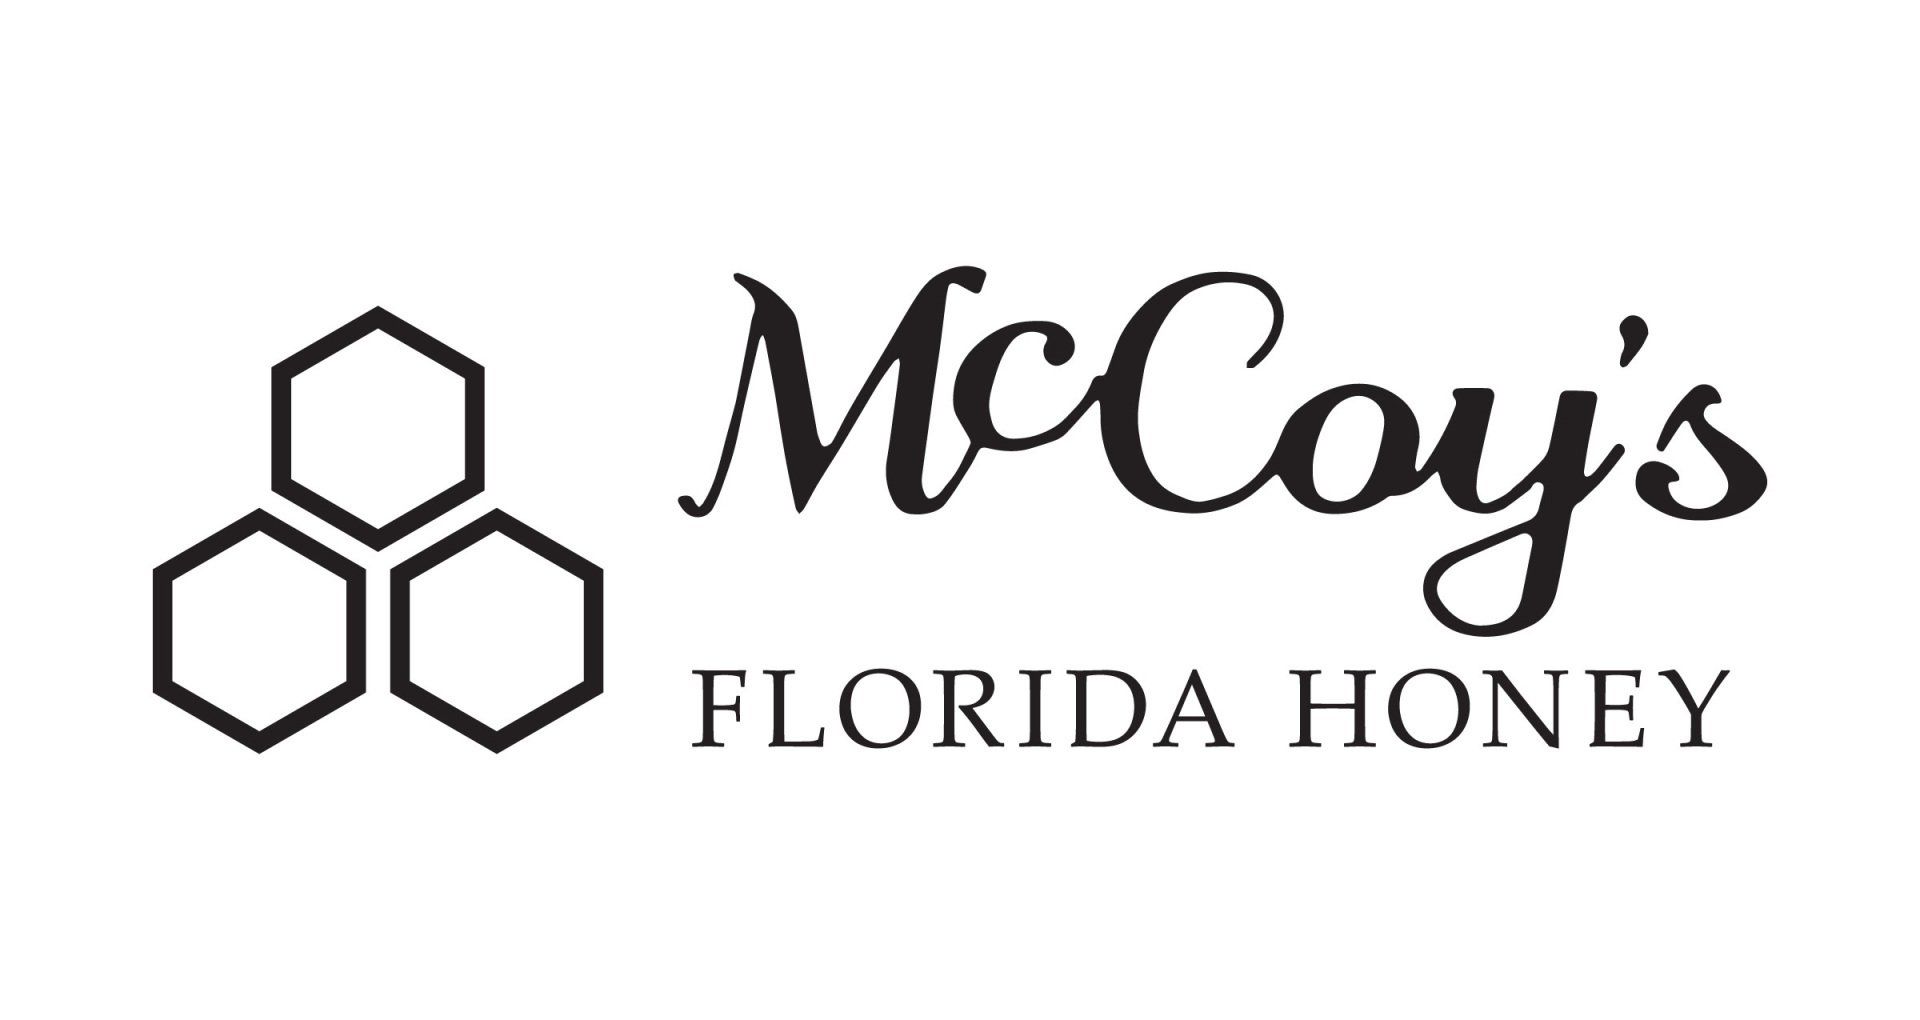 McCoy's Florida Honey Logo Black